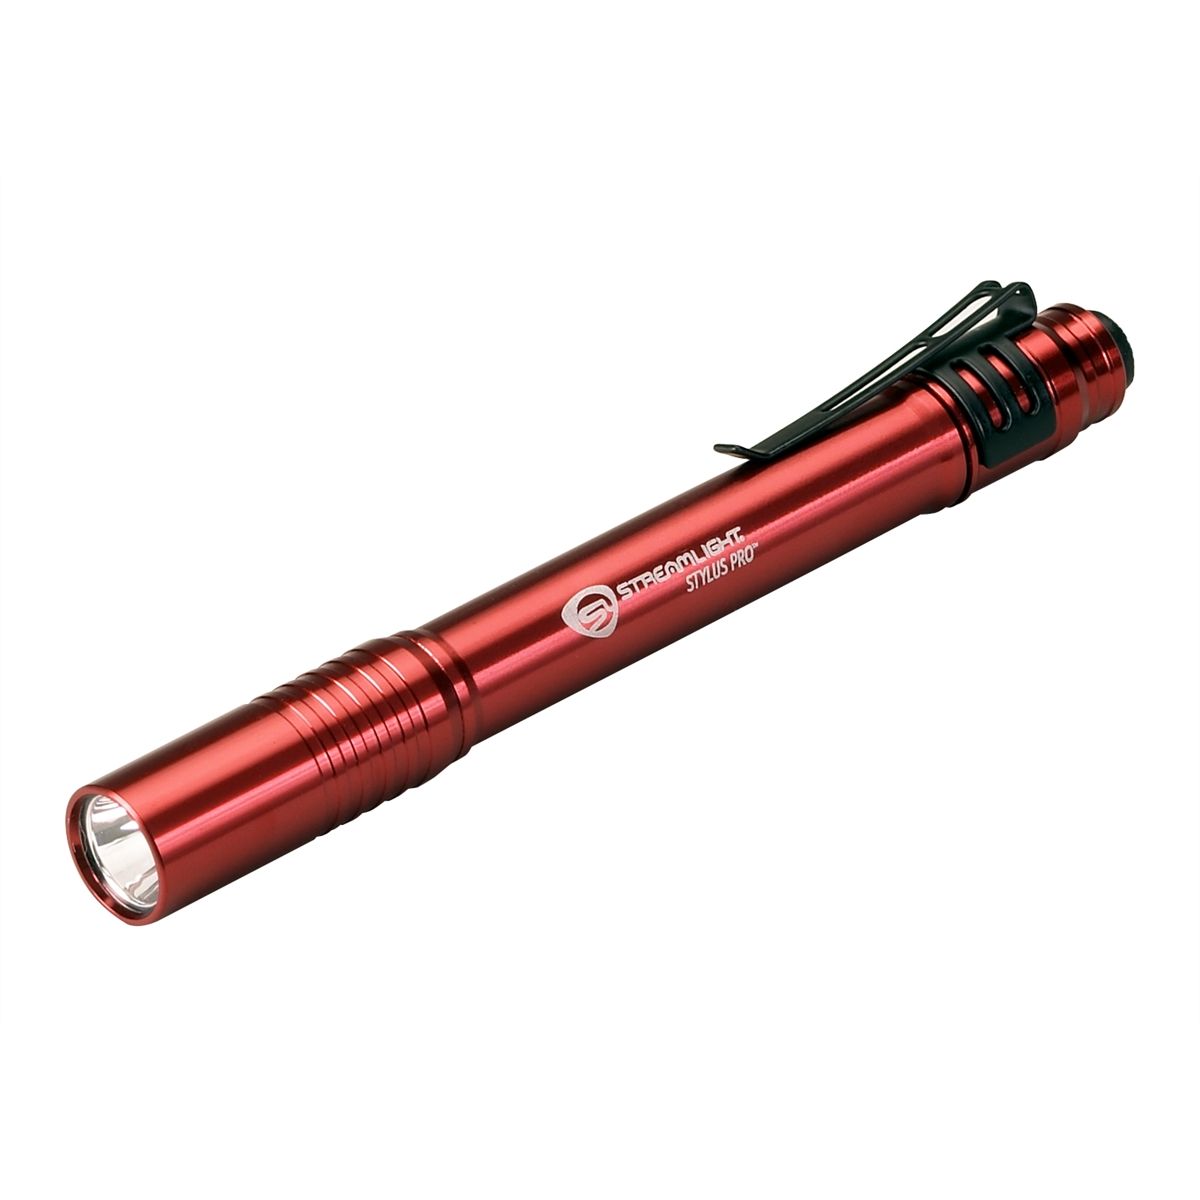 Red Stylus Pro LED Penlight